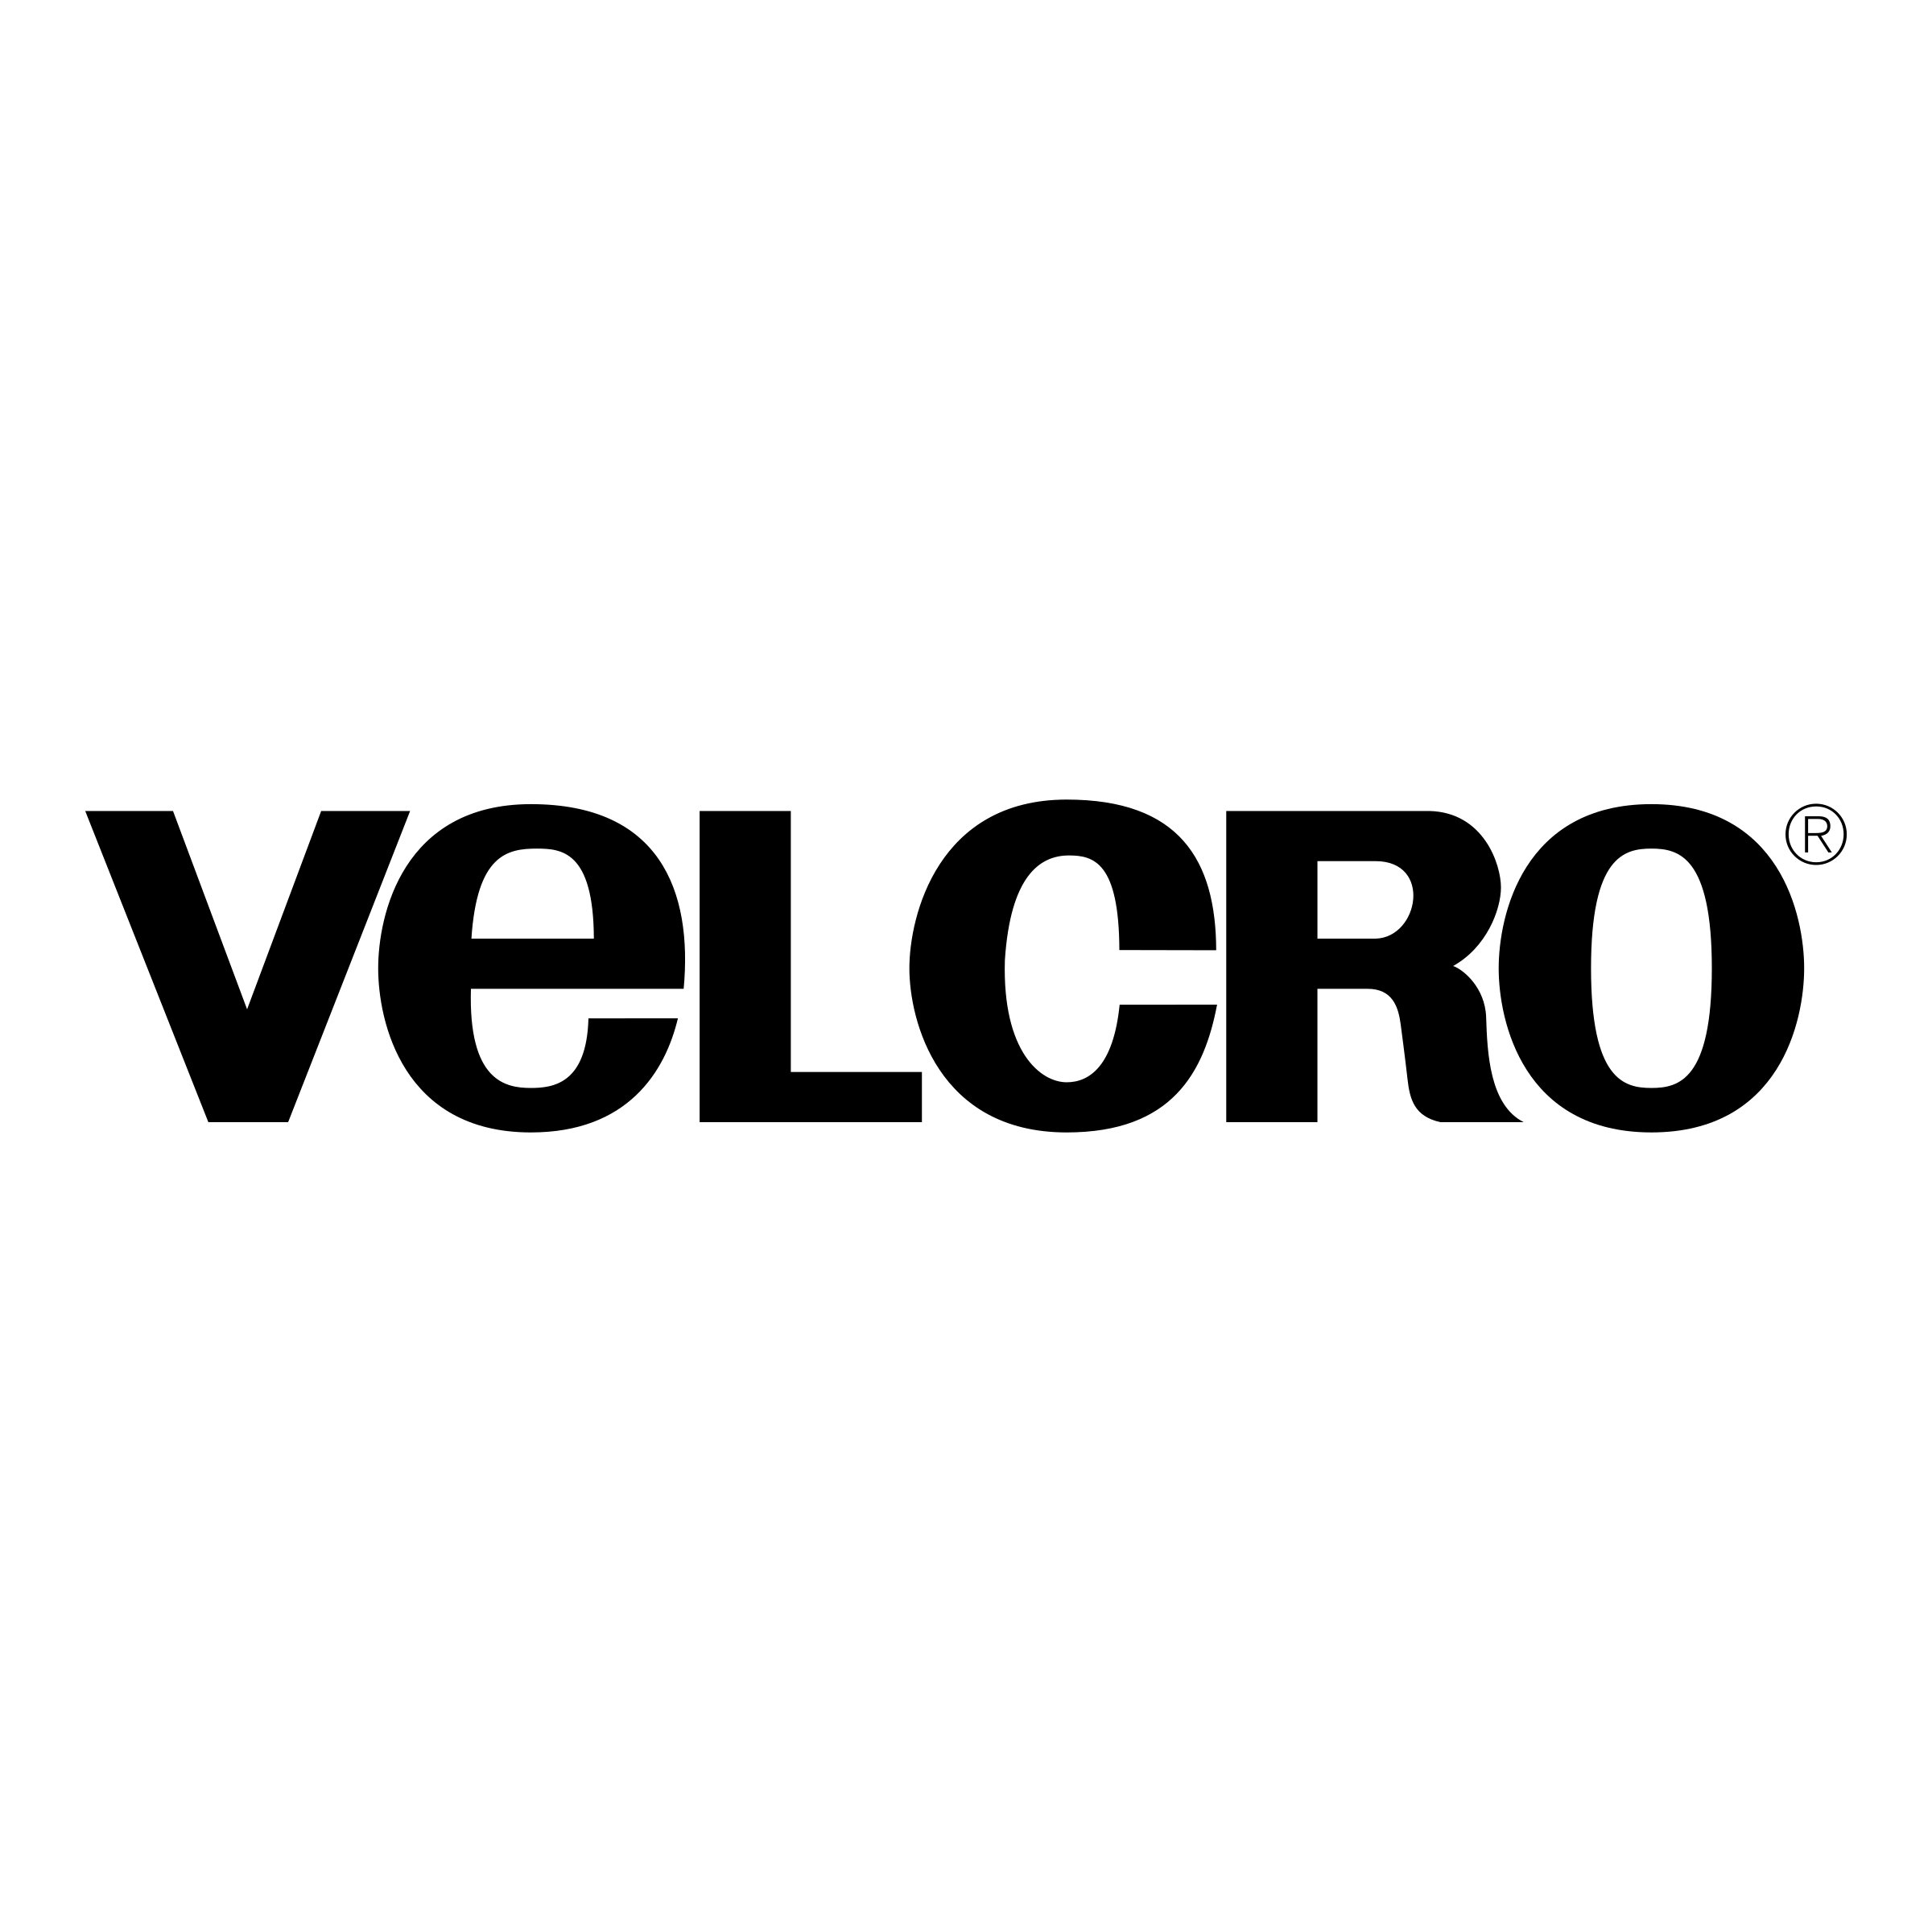 Velcro Logo - Velcro Logo PNG Transparent & SVG Vector - Freebie Supply